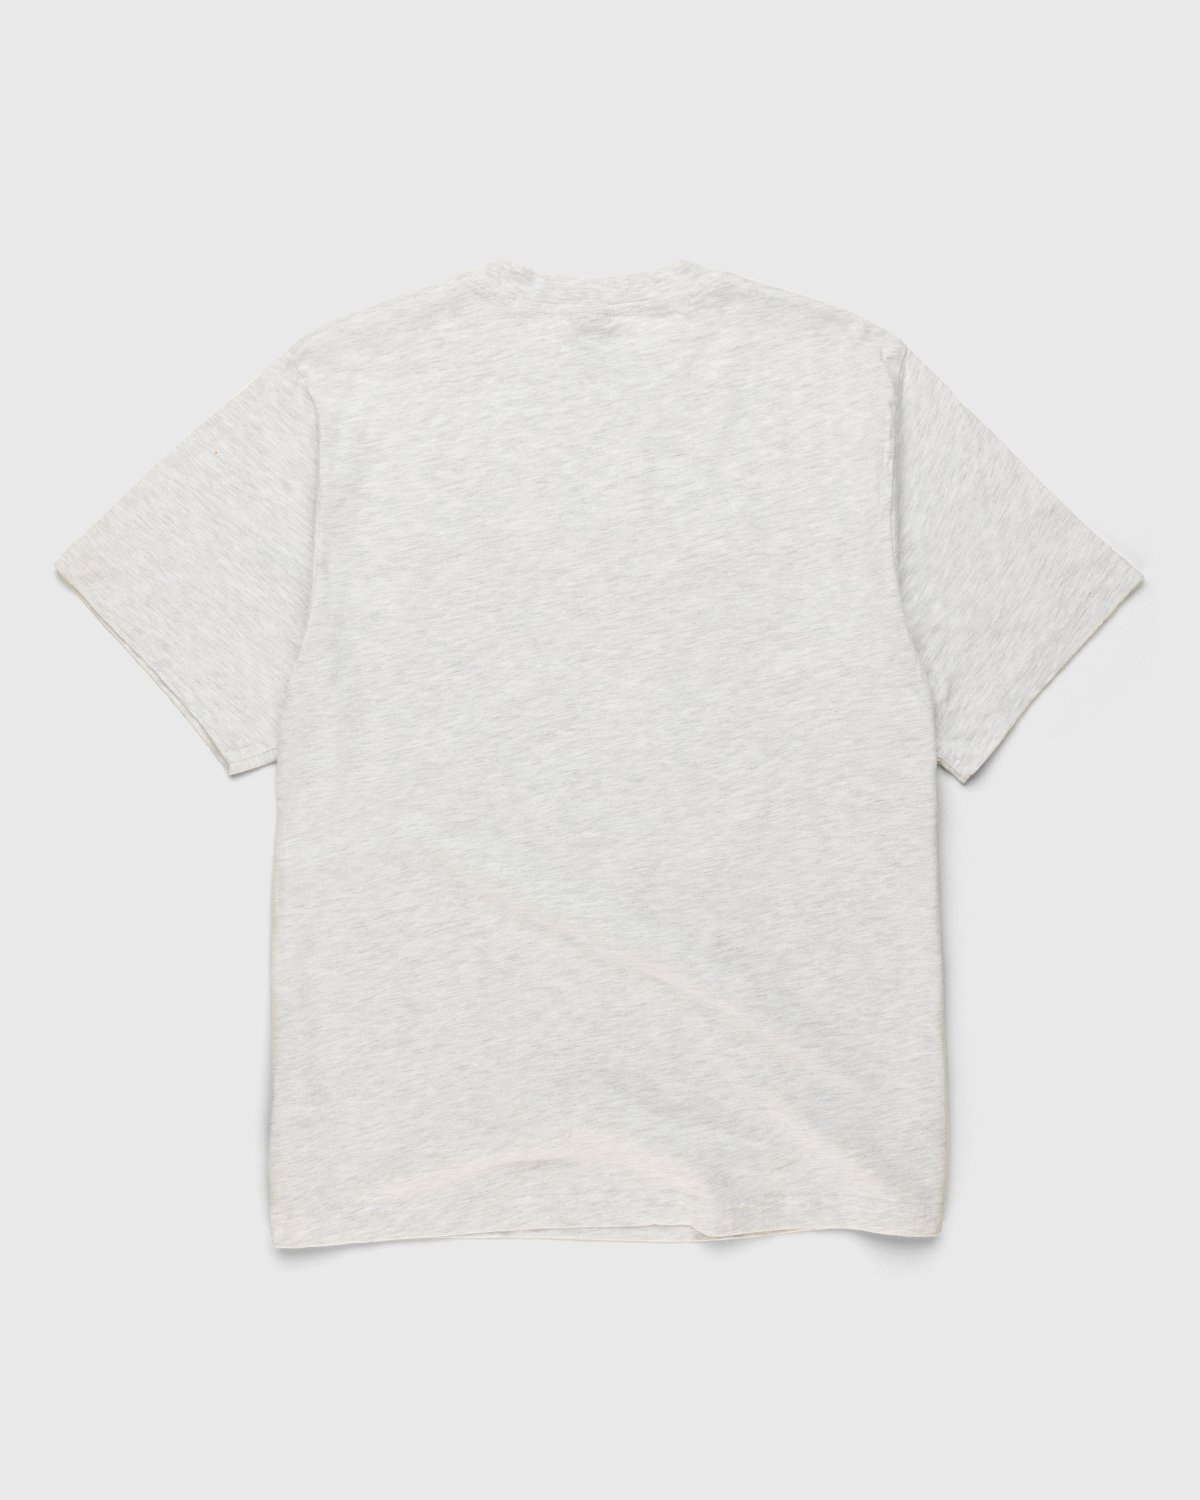 Noon Goons – Var City T-Shirt Grey - T-Shirts - White - Image 2